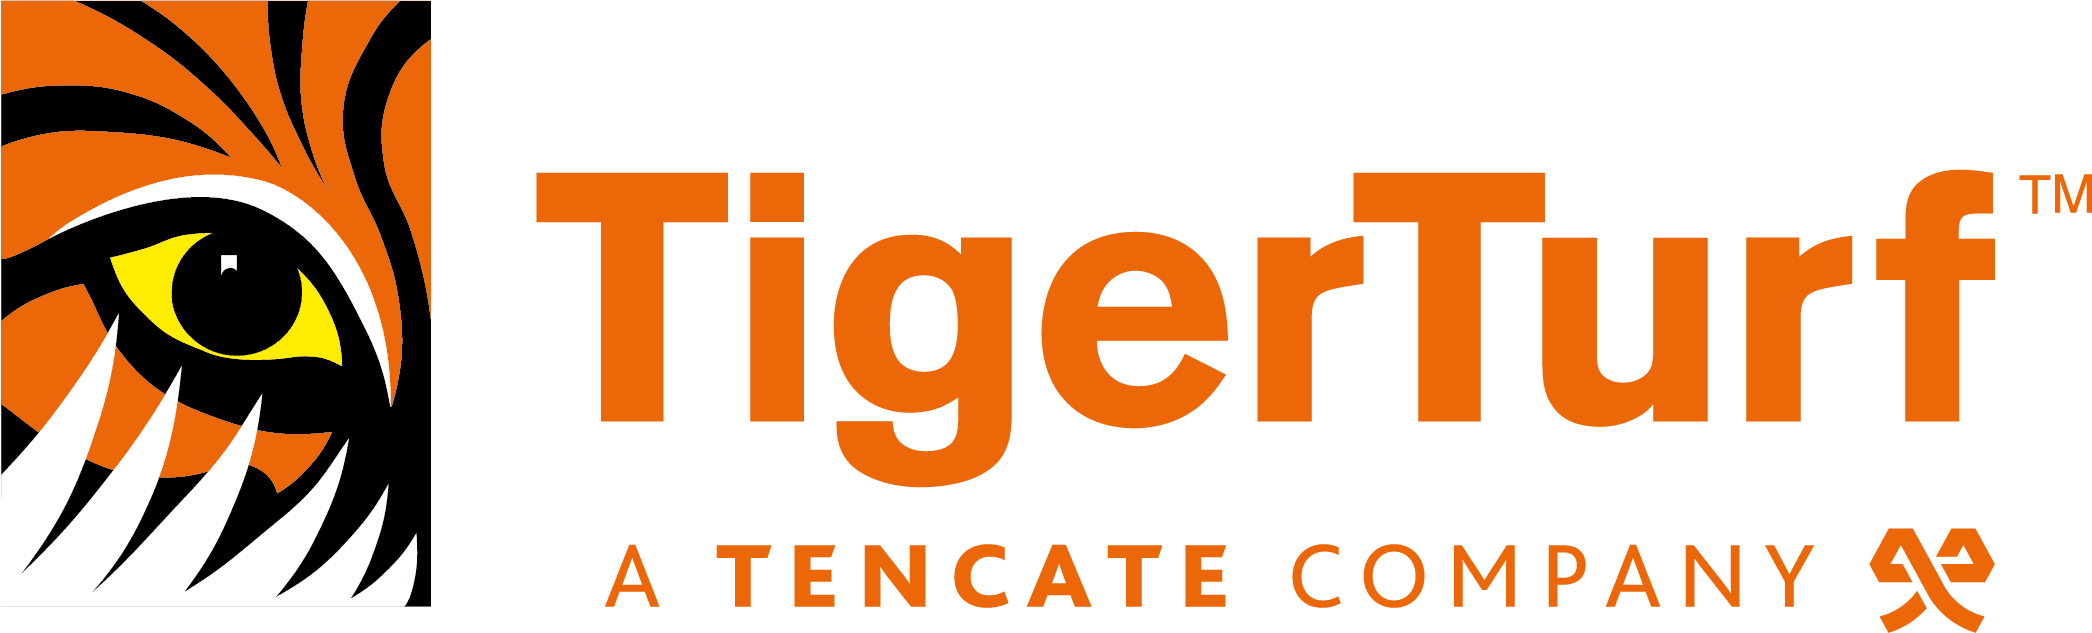 TigerTurf UK